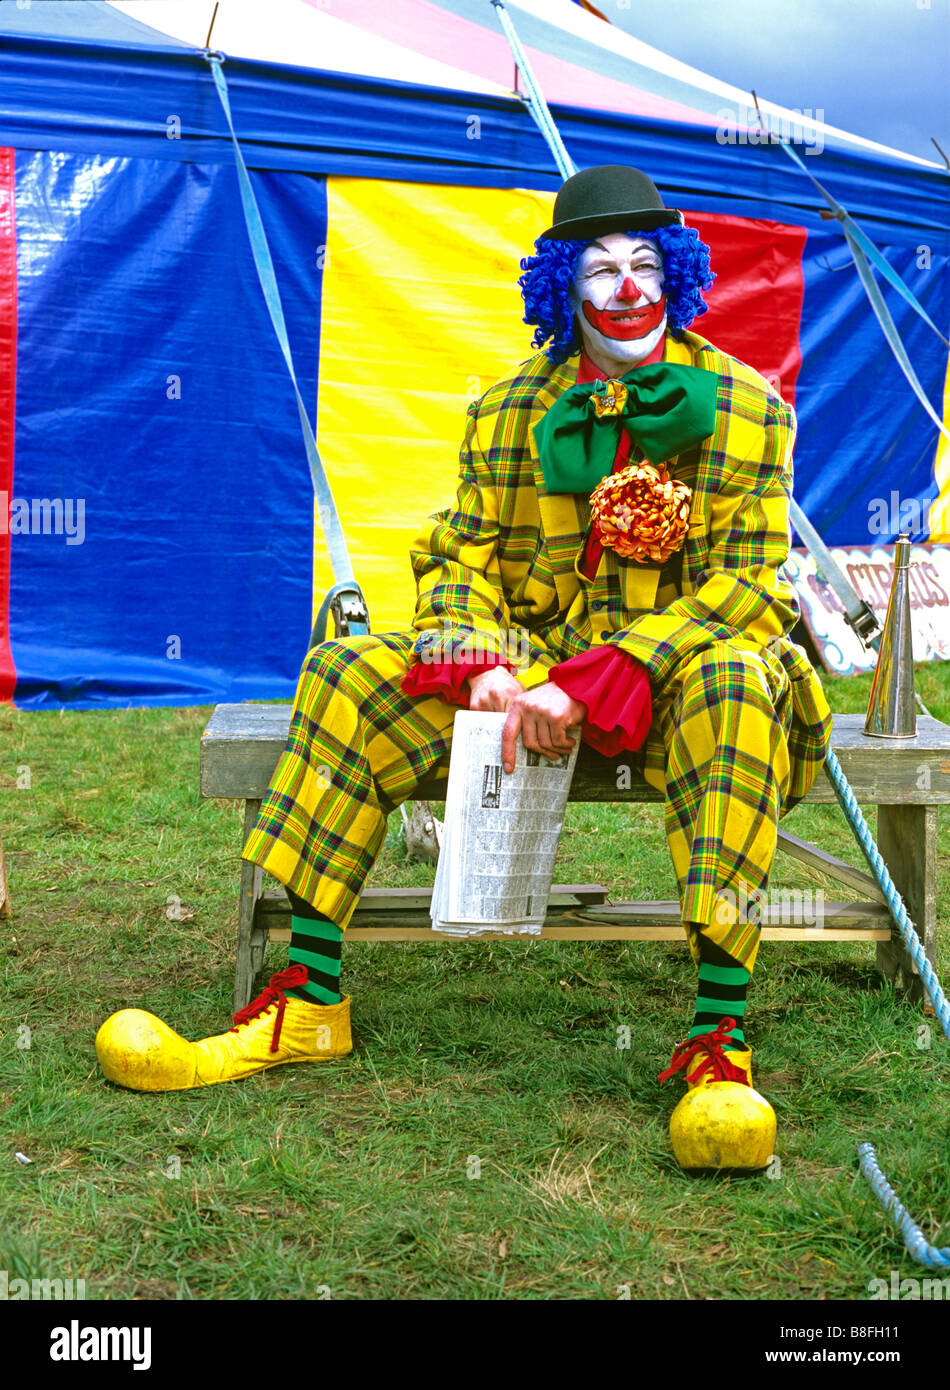 Circus clown Stock Photo